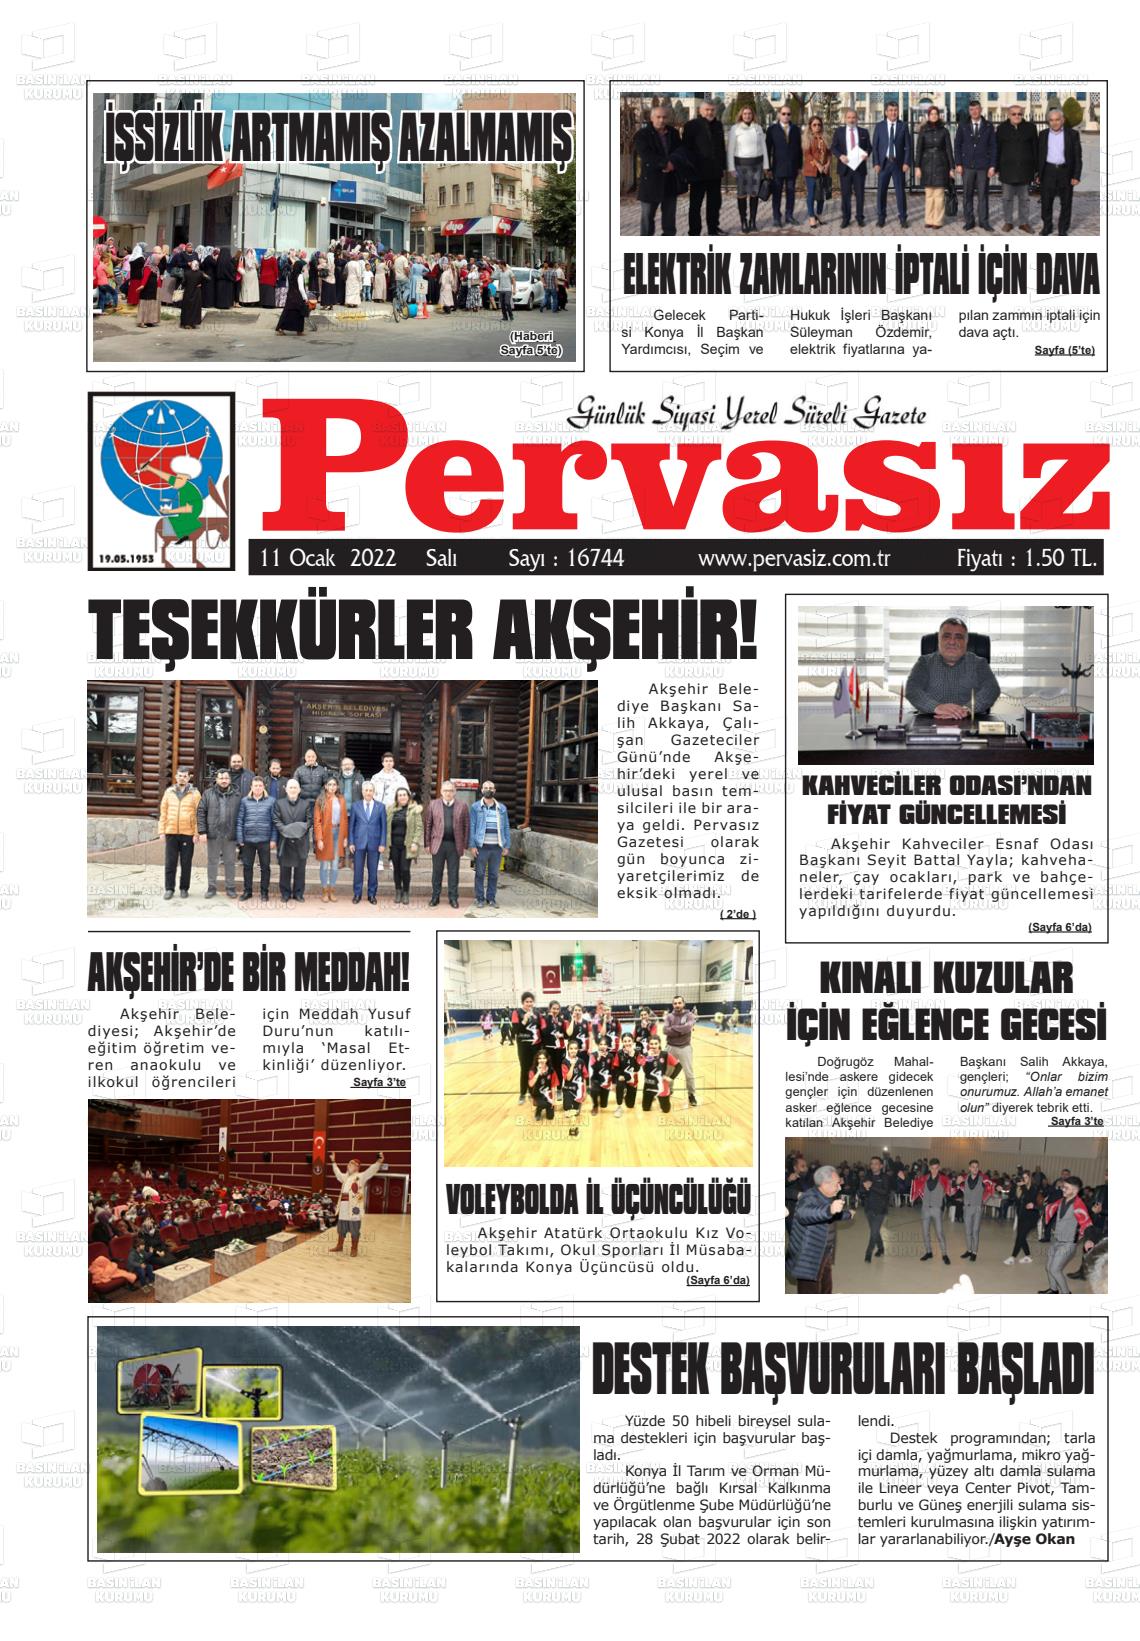 11 Ocak 2022 Konya Pervasız Gazete Manşeti